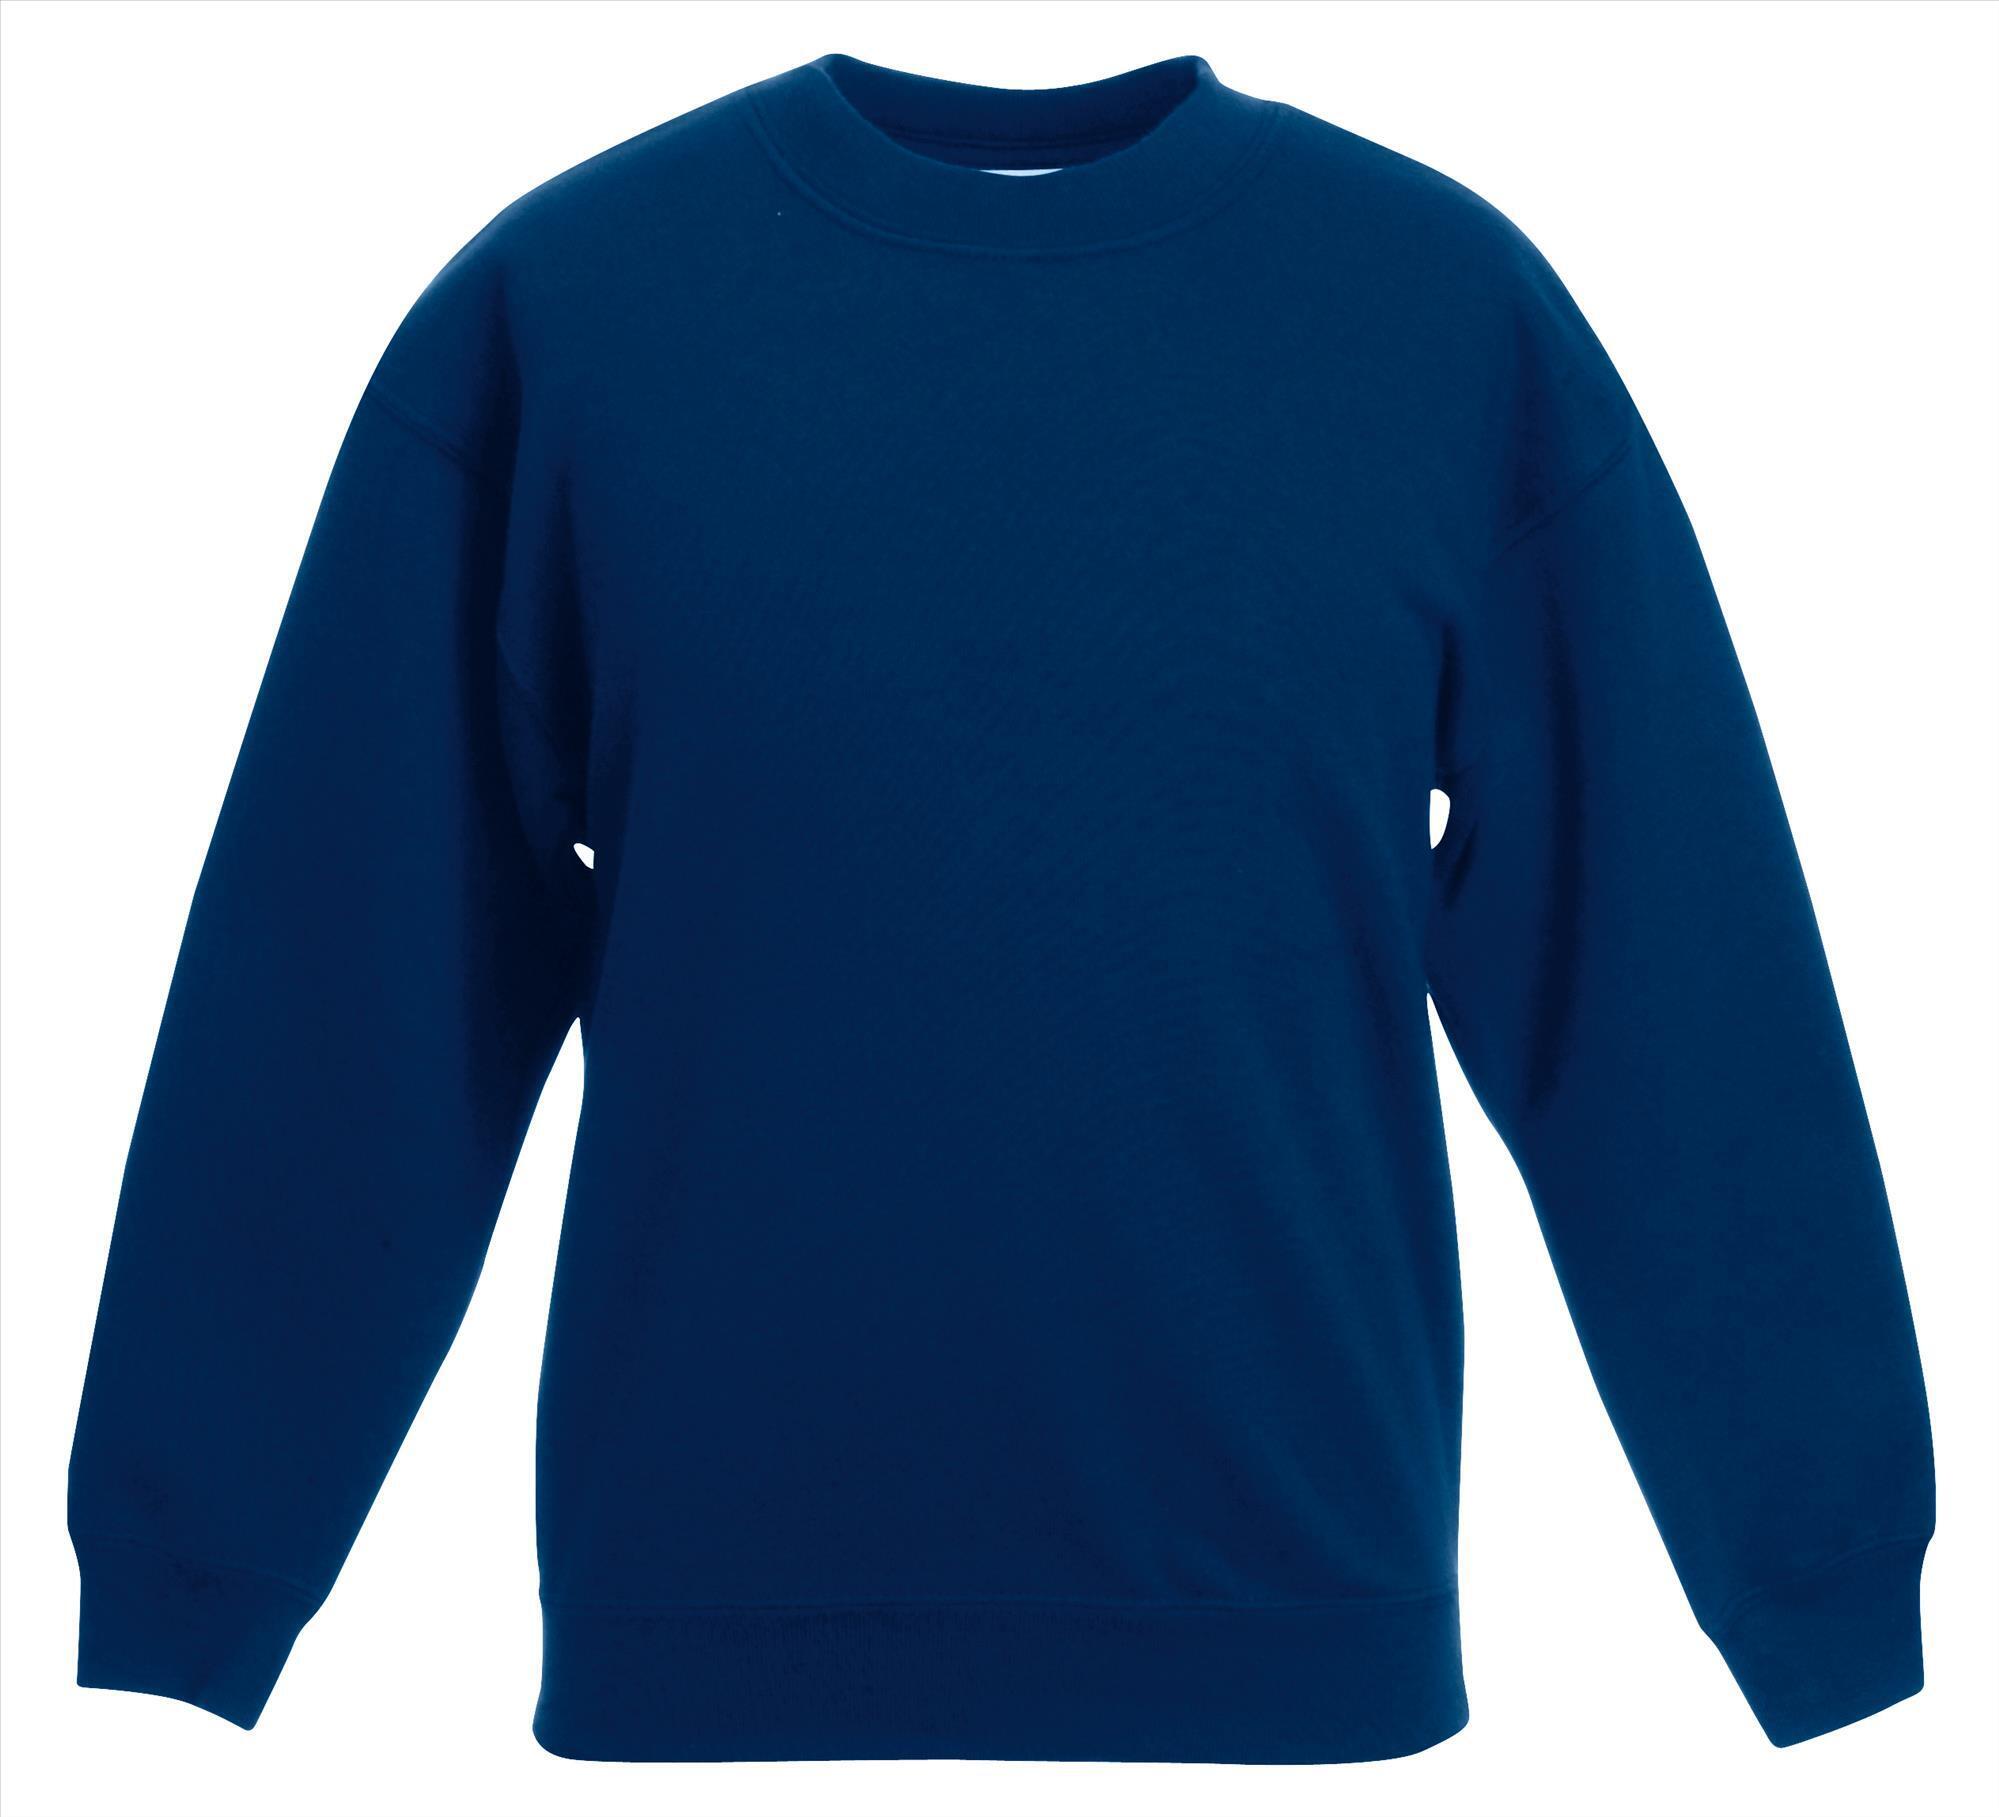 Kinder trui sweater deep donker blauw